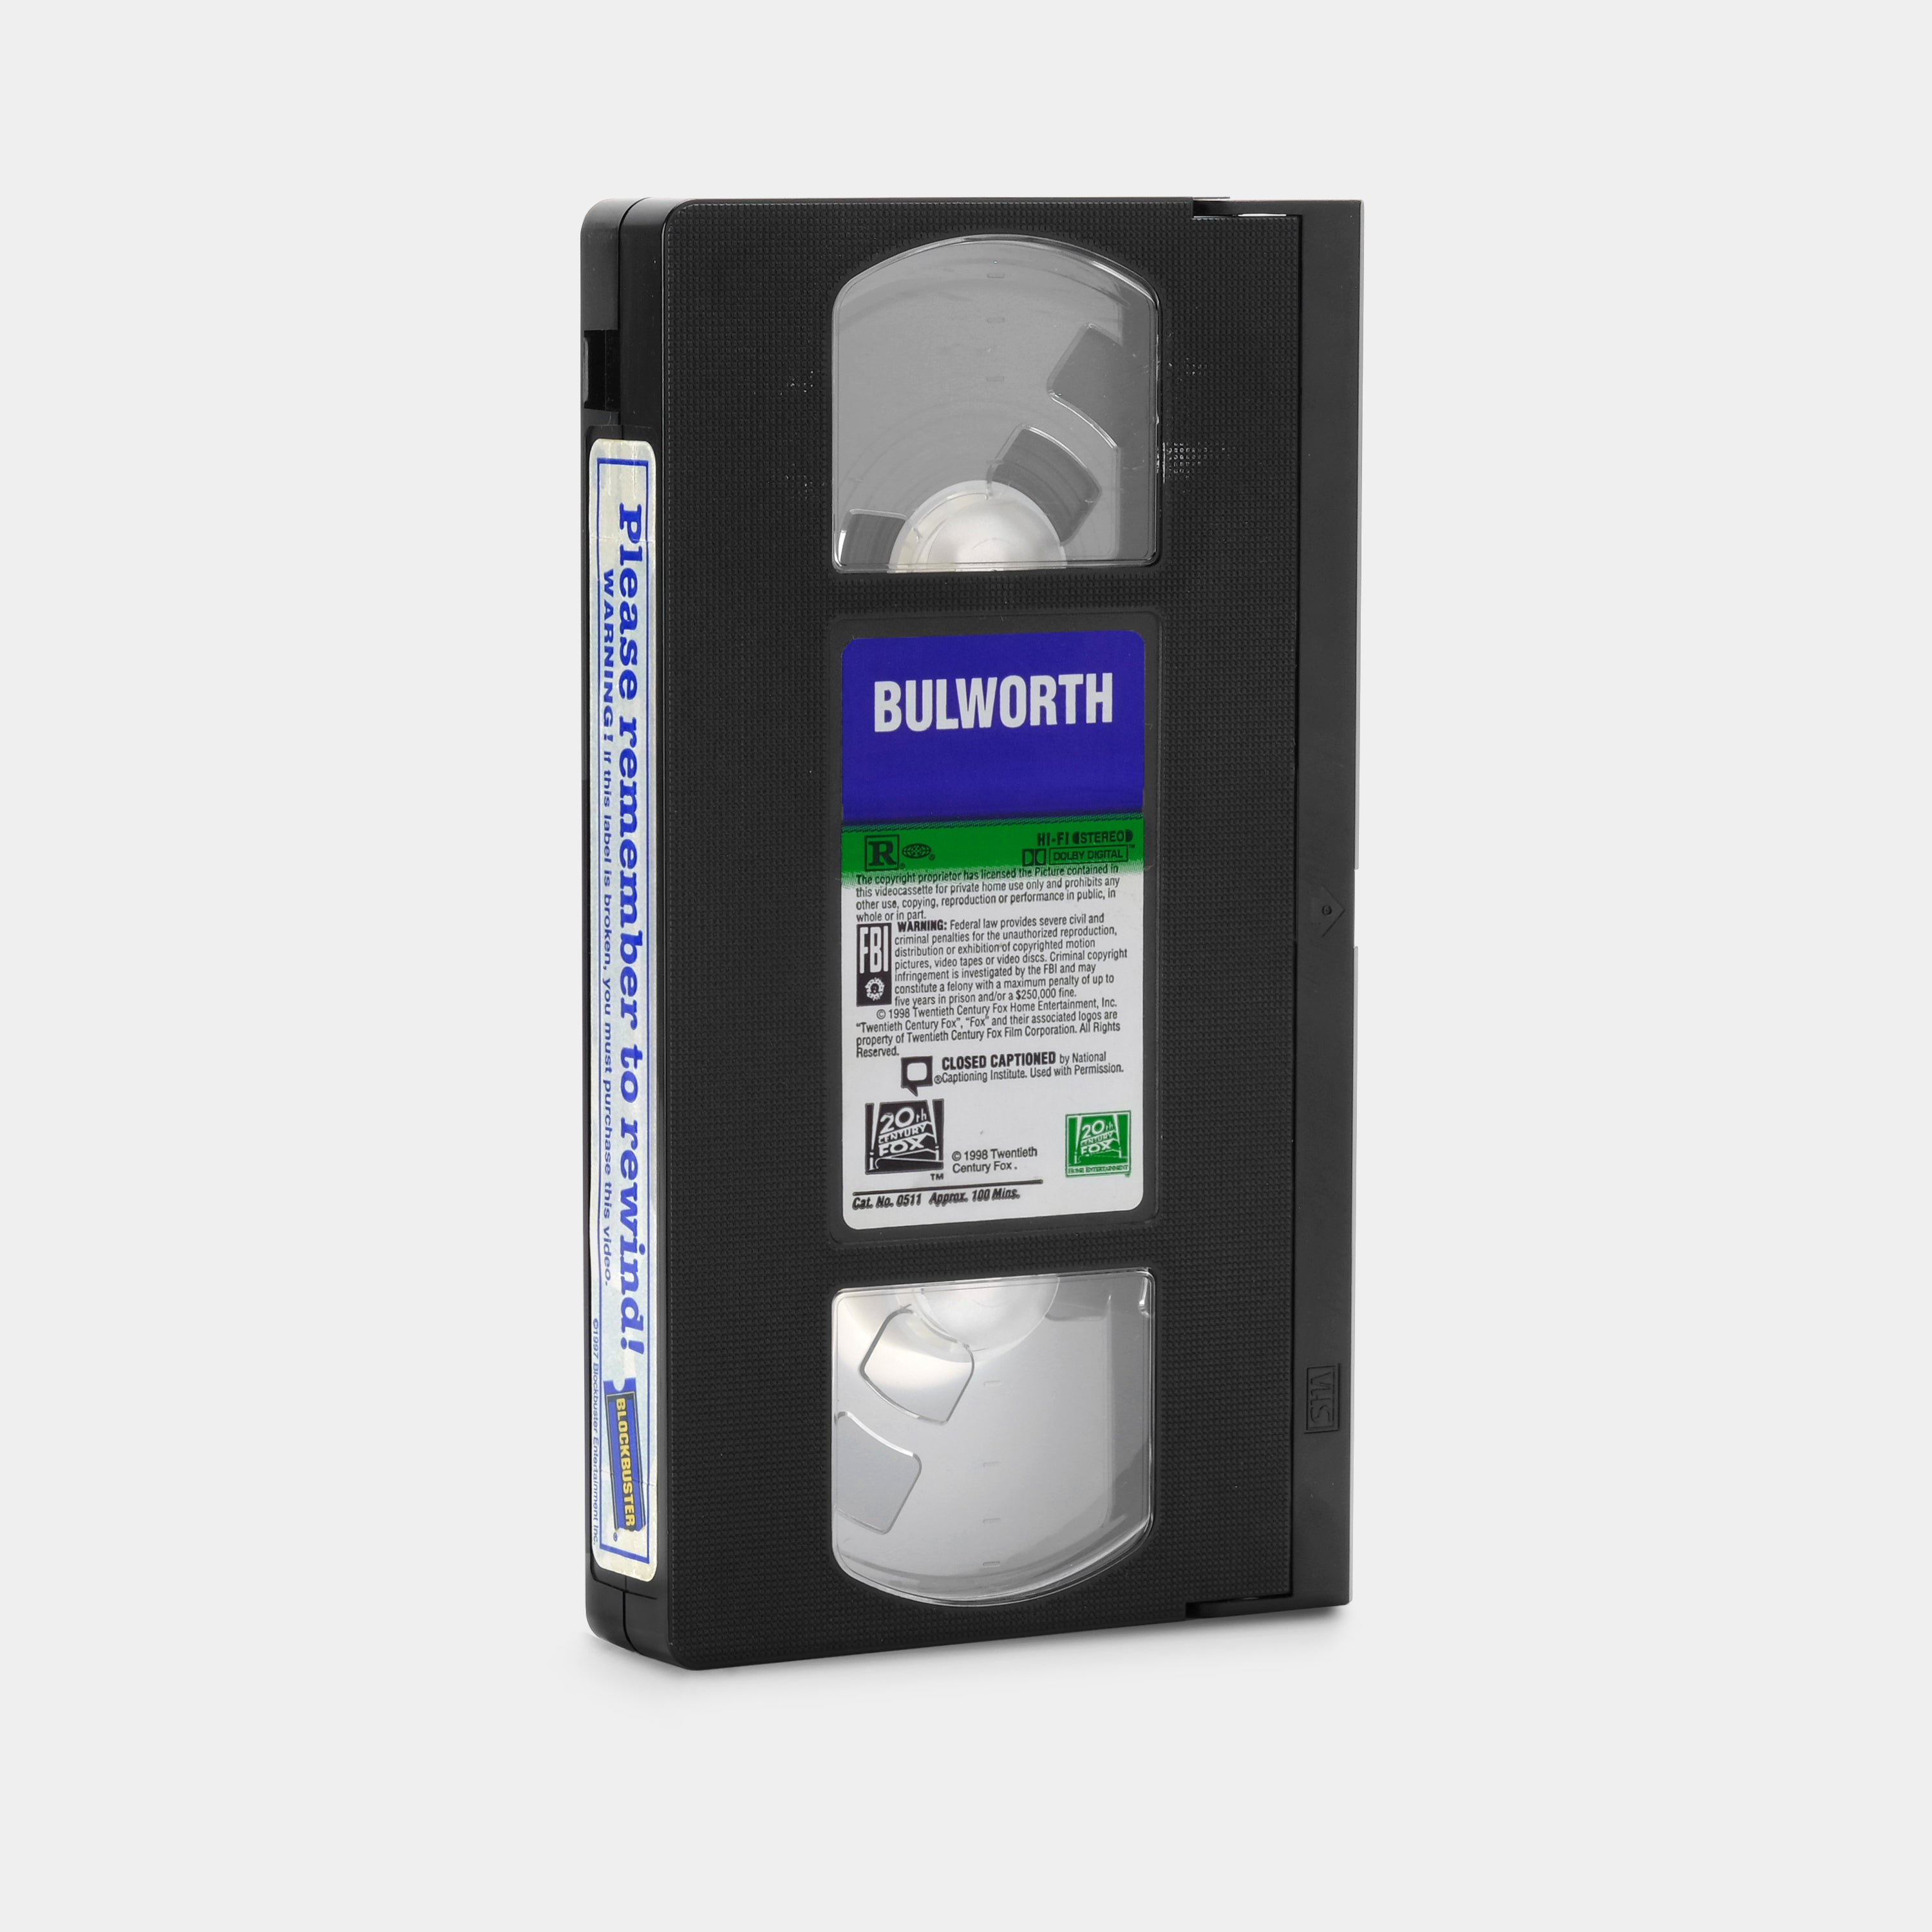 Bulworth VHS Tape